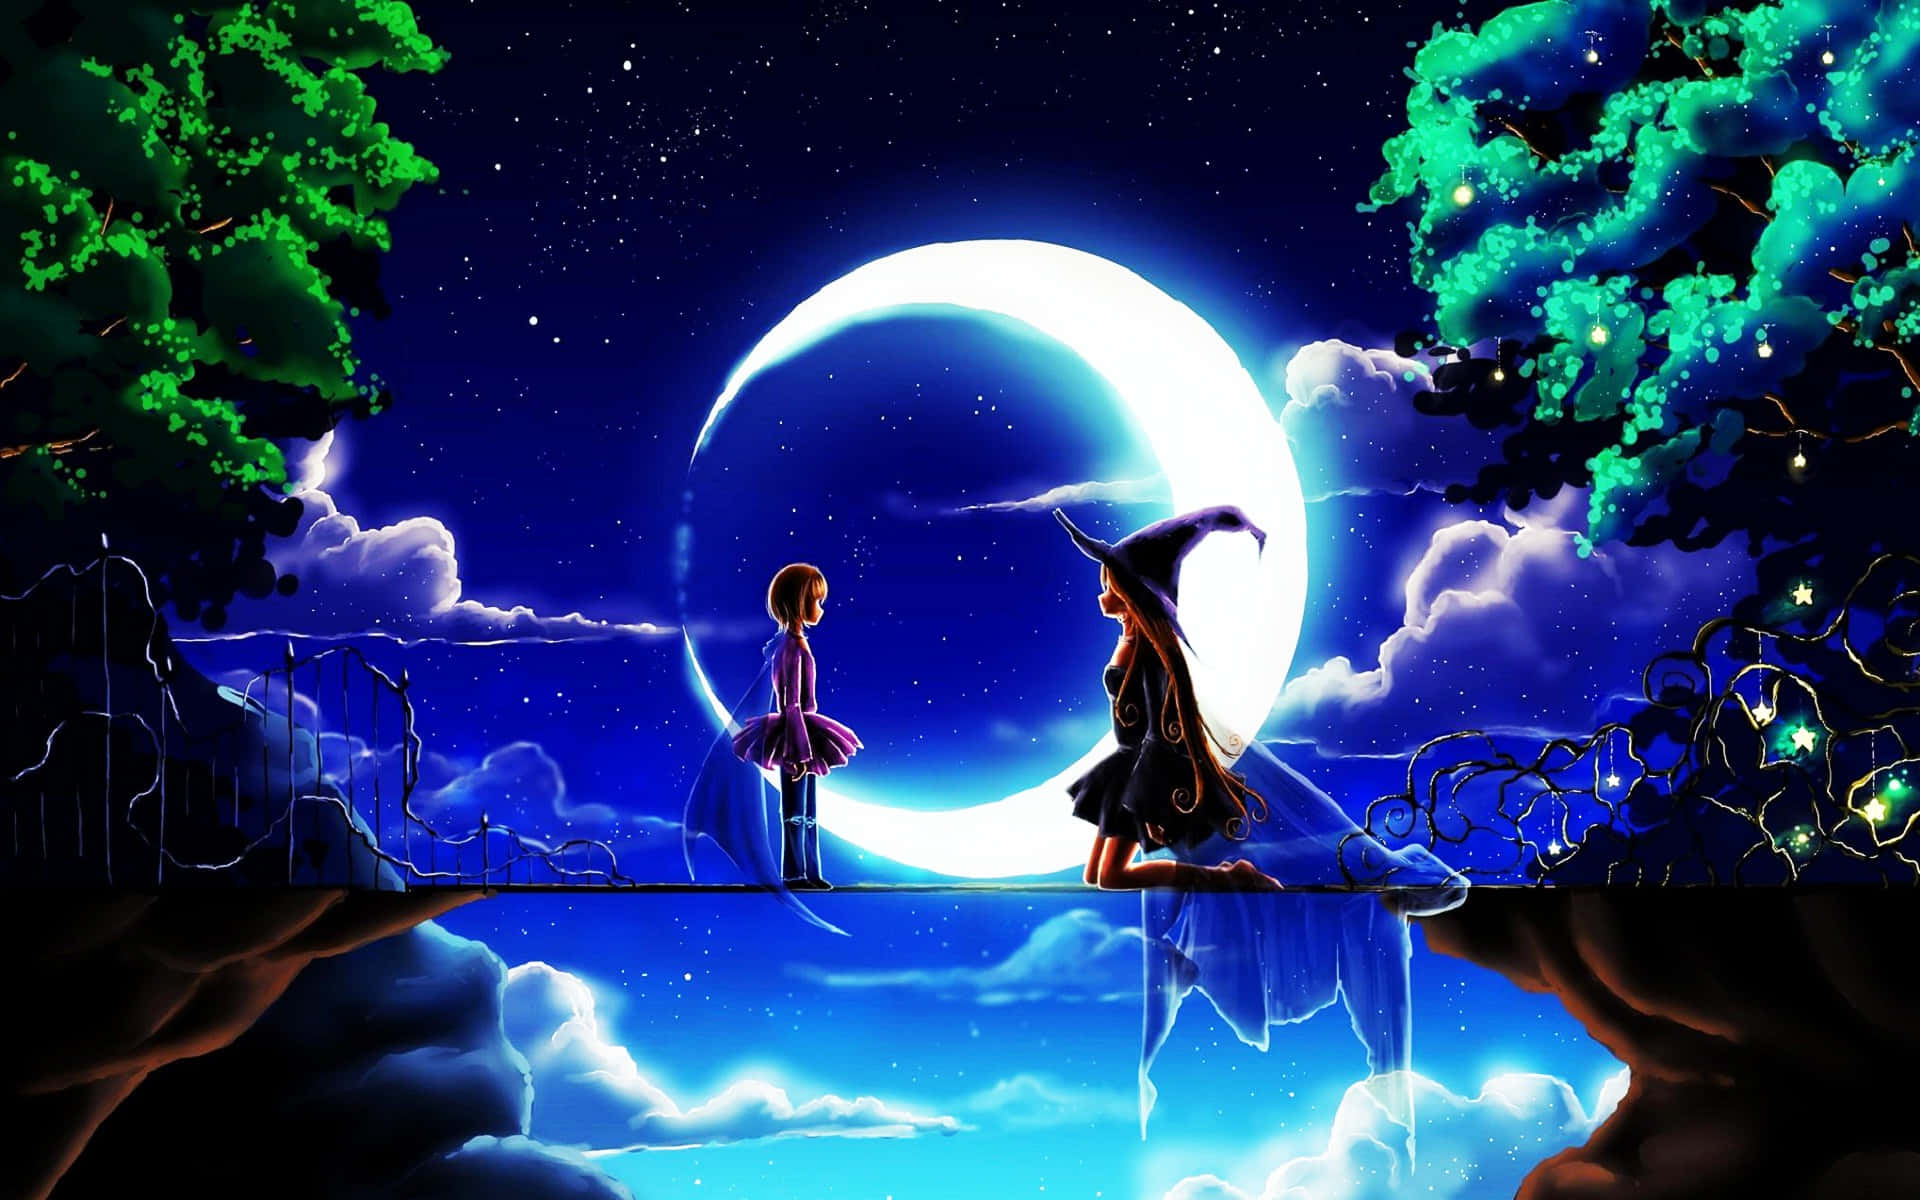 Proper Magical Night Anime Wallpaper